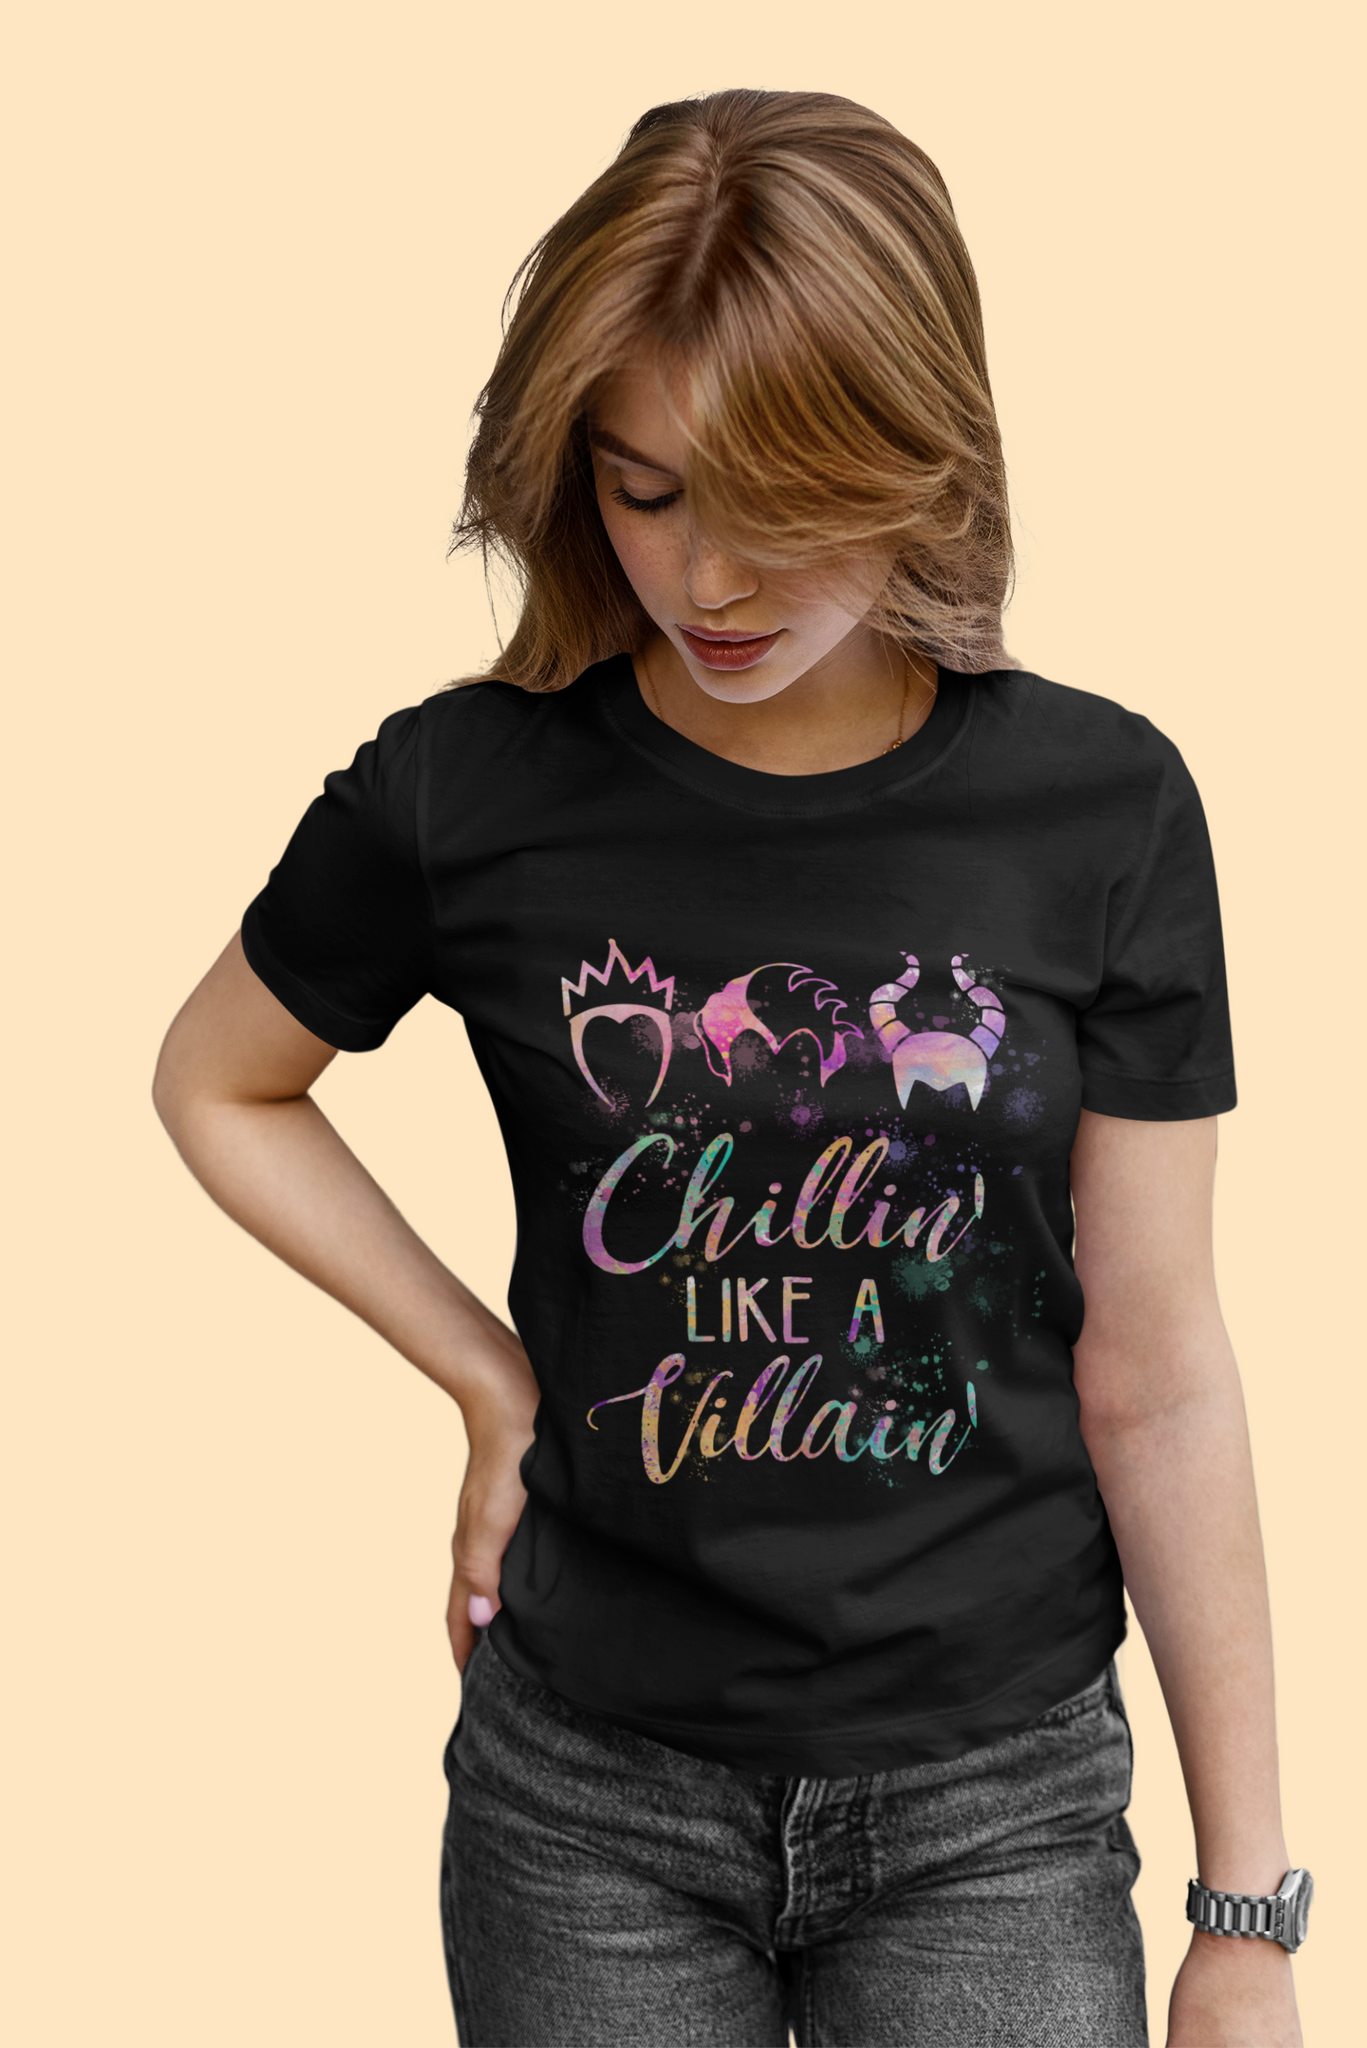 Disney Maleficent T Shirt, Disney Villains T Shirt, The Evil Queen Ursula Maleficent Tshirt, Chilling Like A Villain Shirt